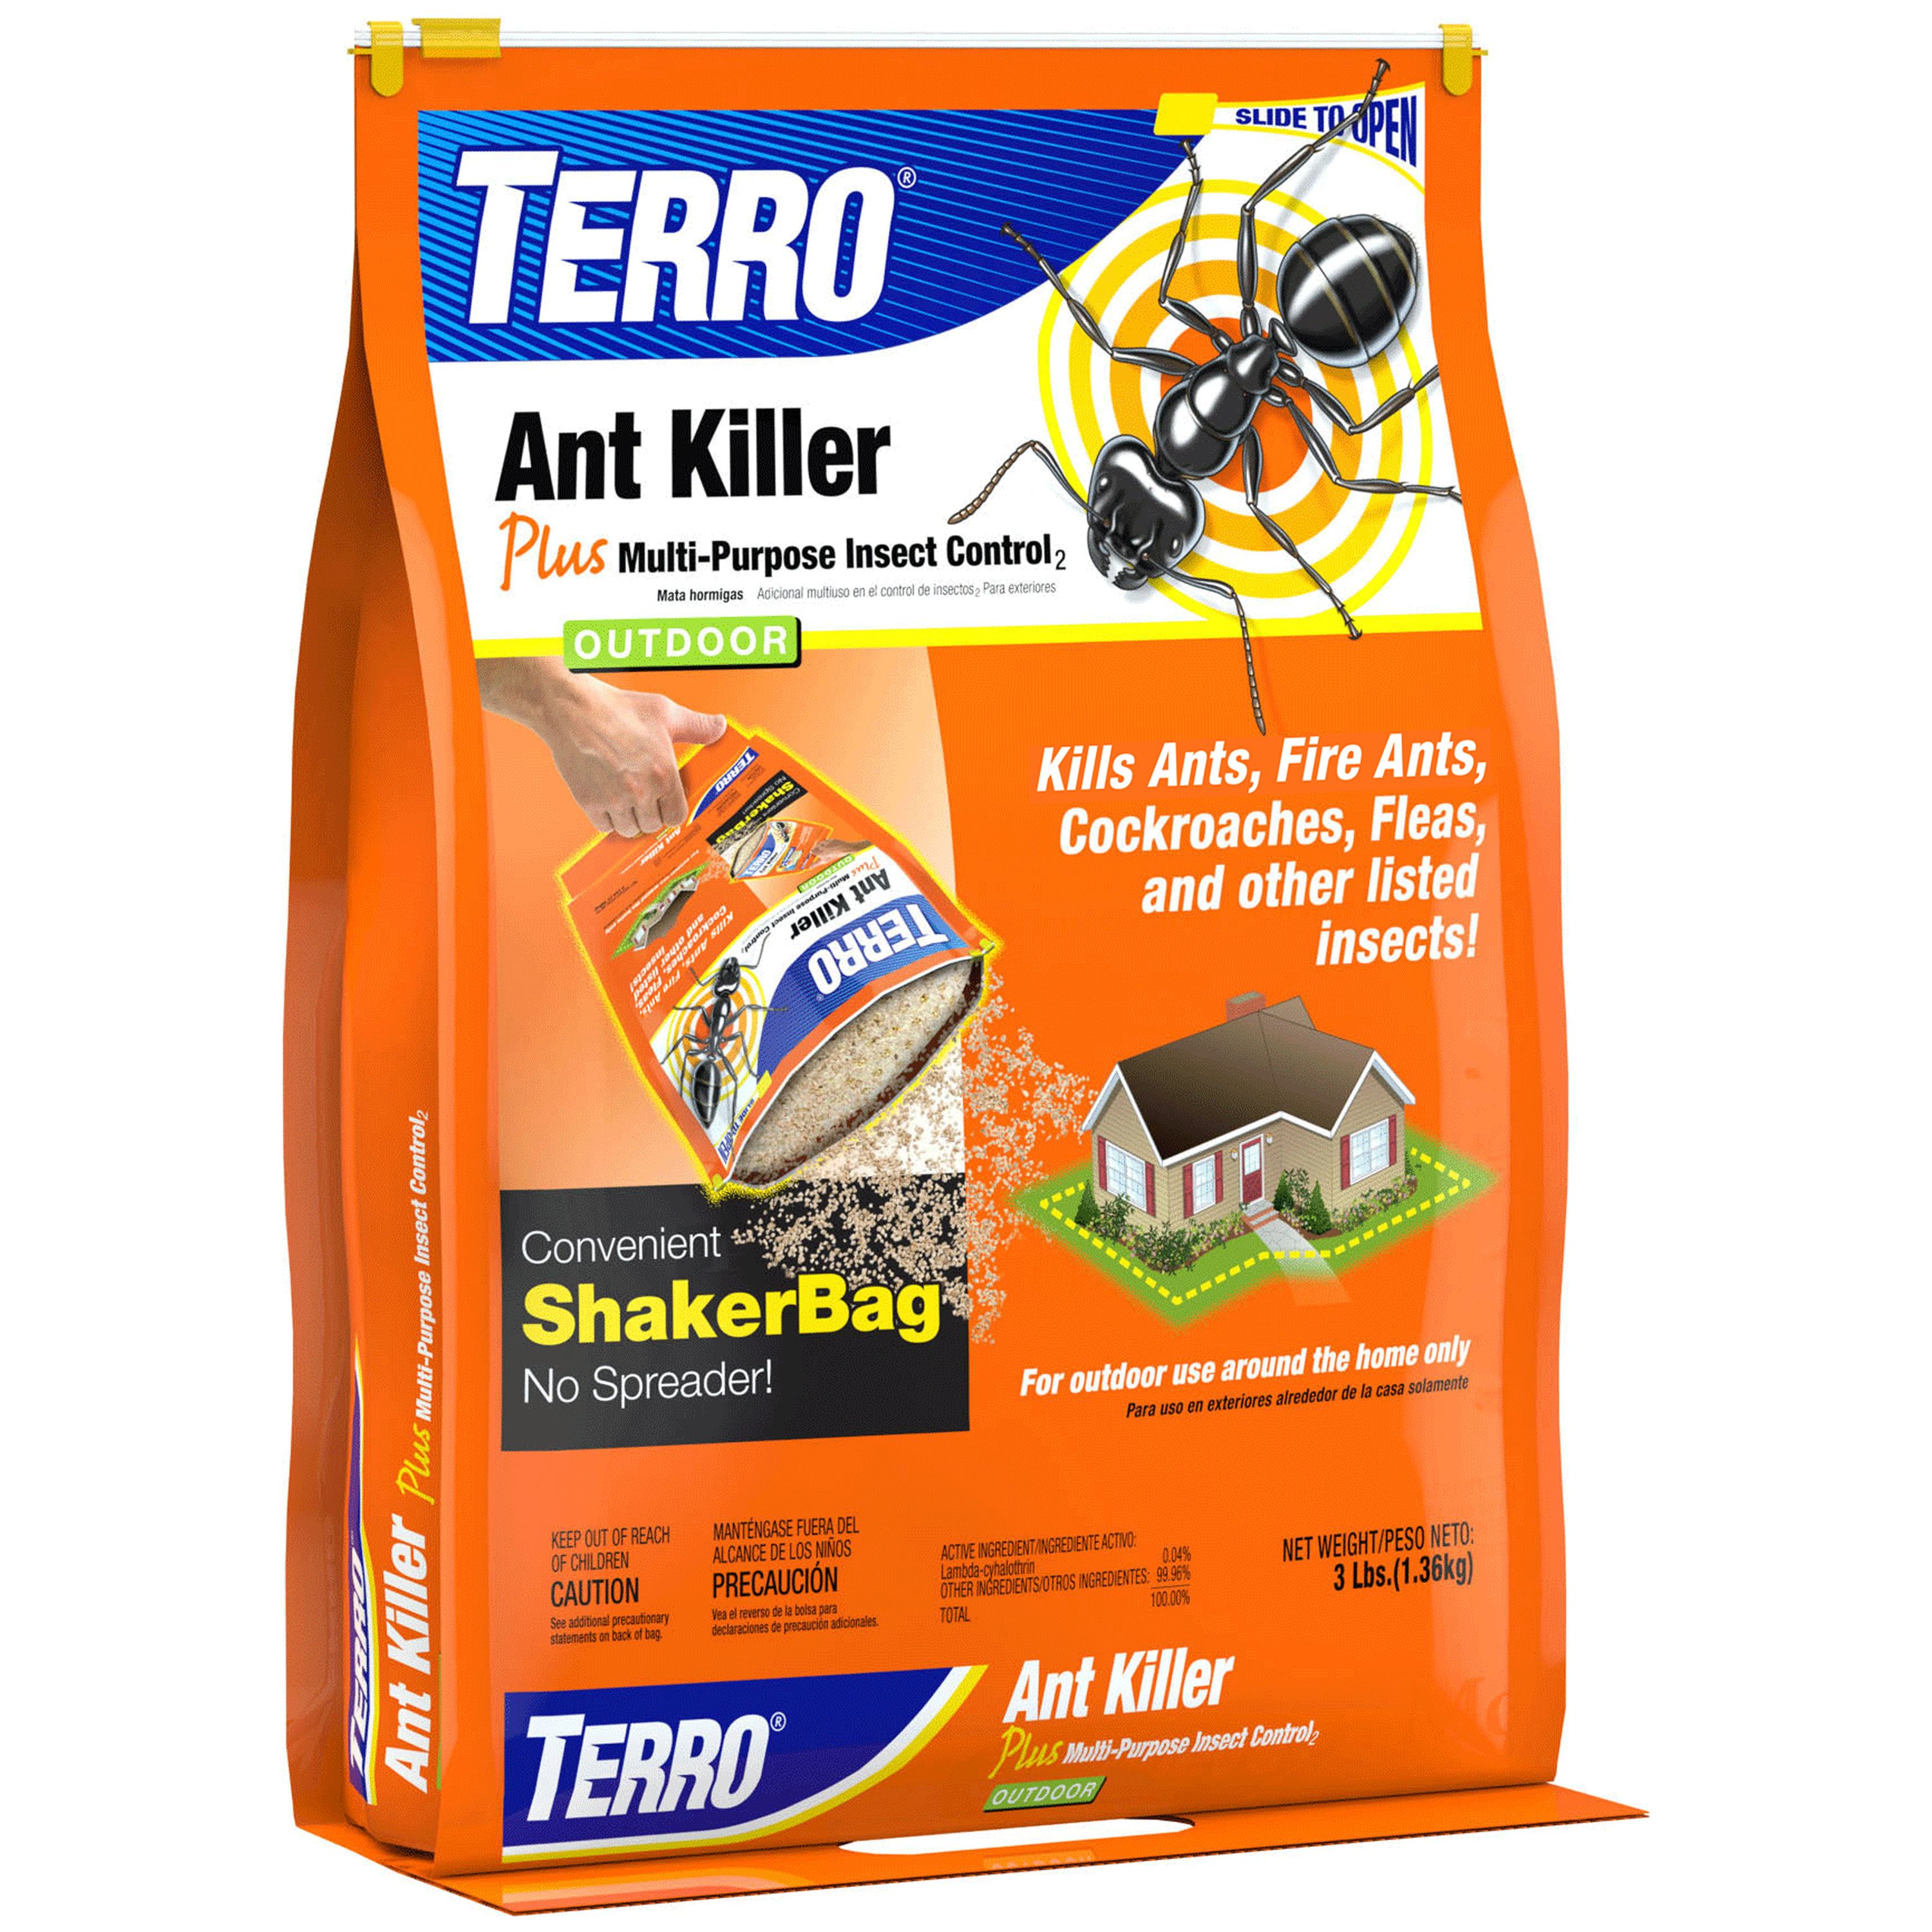 TERRO 3 lb Ant Killer Plus Multi-Purpose Insect Control - image 1 of 13